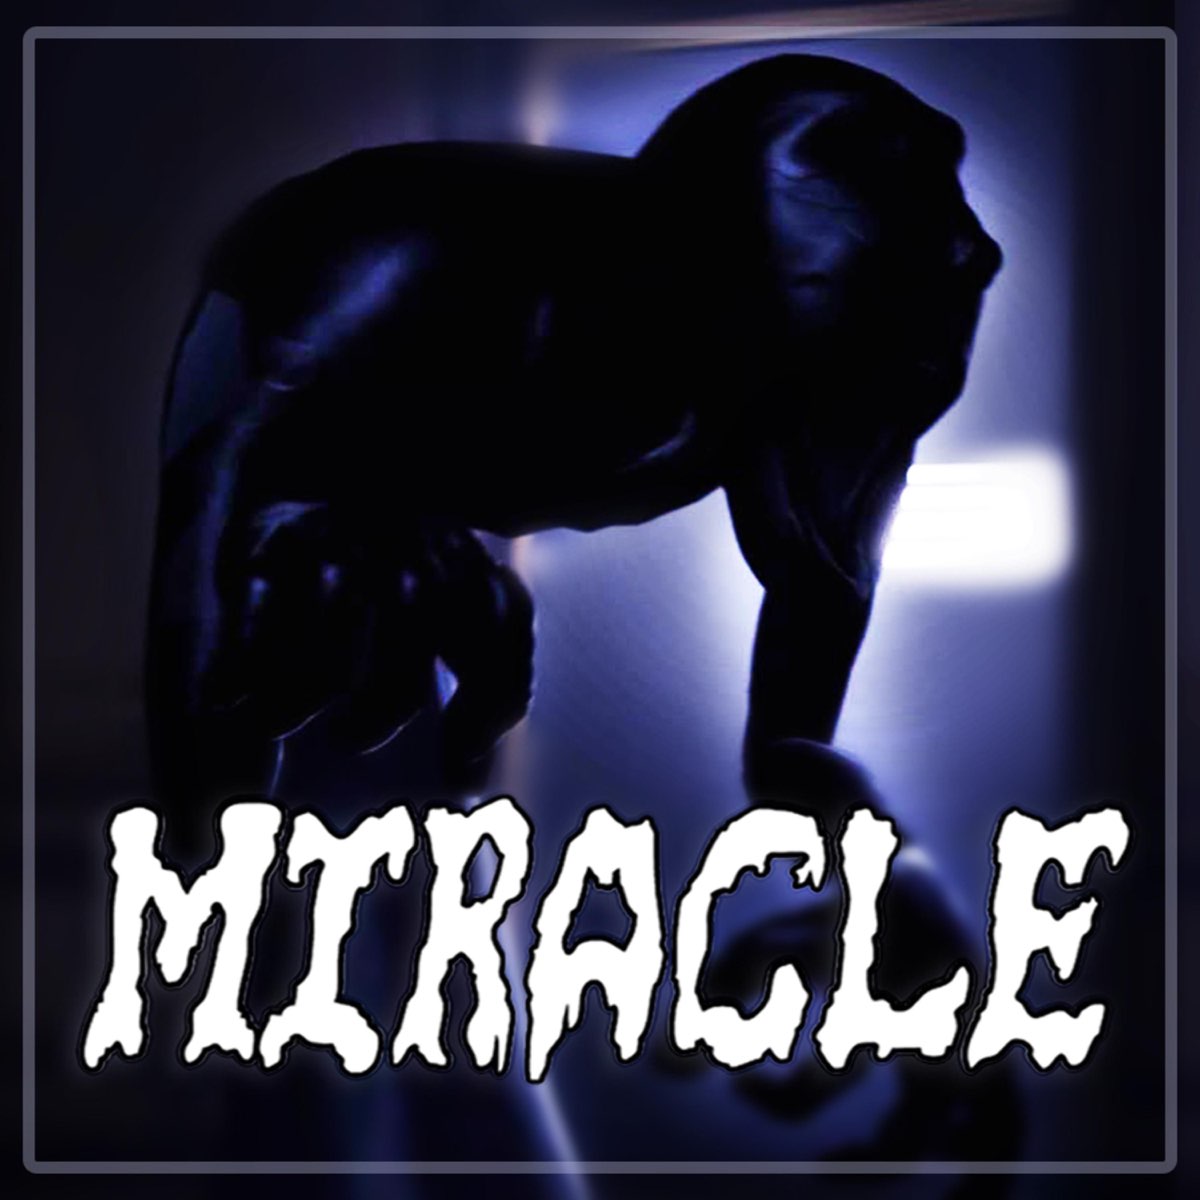 Miracle feat. Miracle песня. Empty Dreams обложка. Opinions cg5 обложка. Картинки с надписью " Miracle Music".